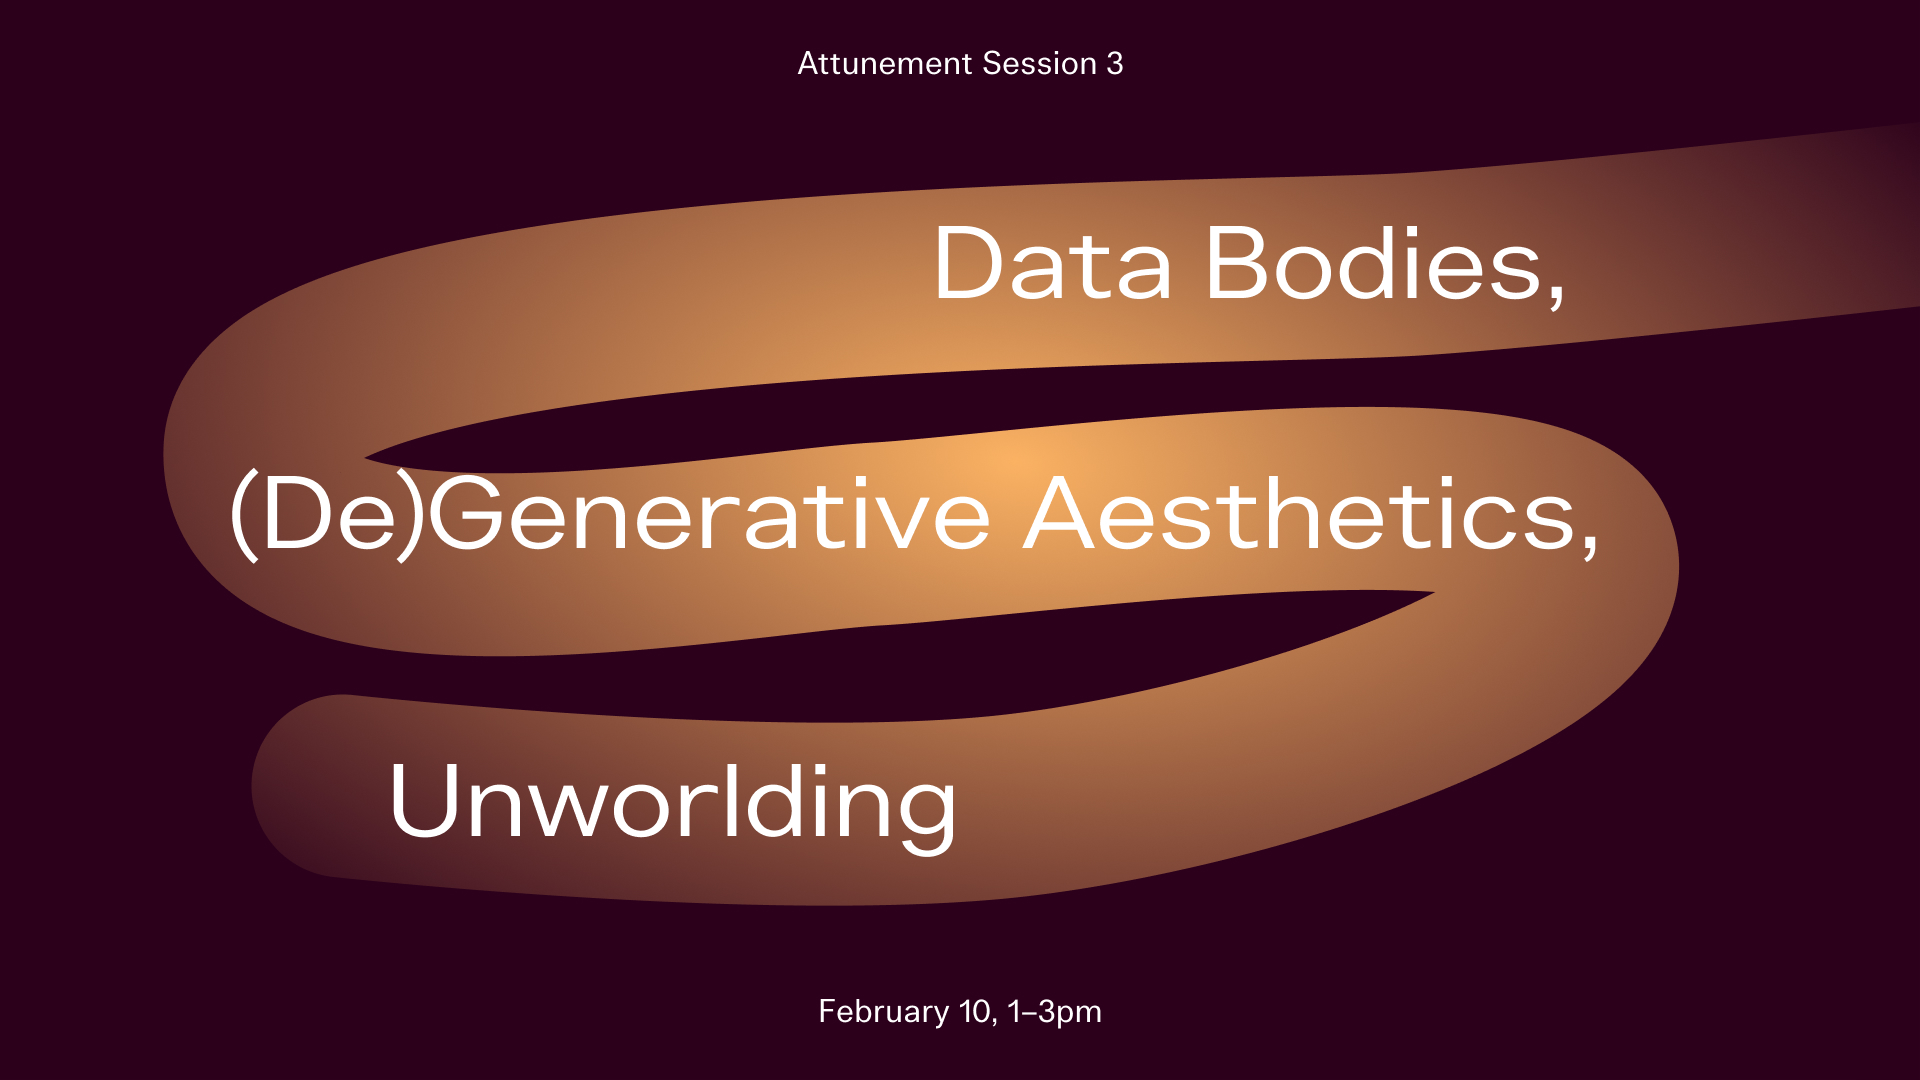 Text image with swirl: Attunement Session 3 Data Bodies, (De)Generative Aesthetics, Unworlding